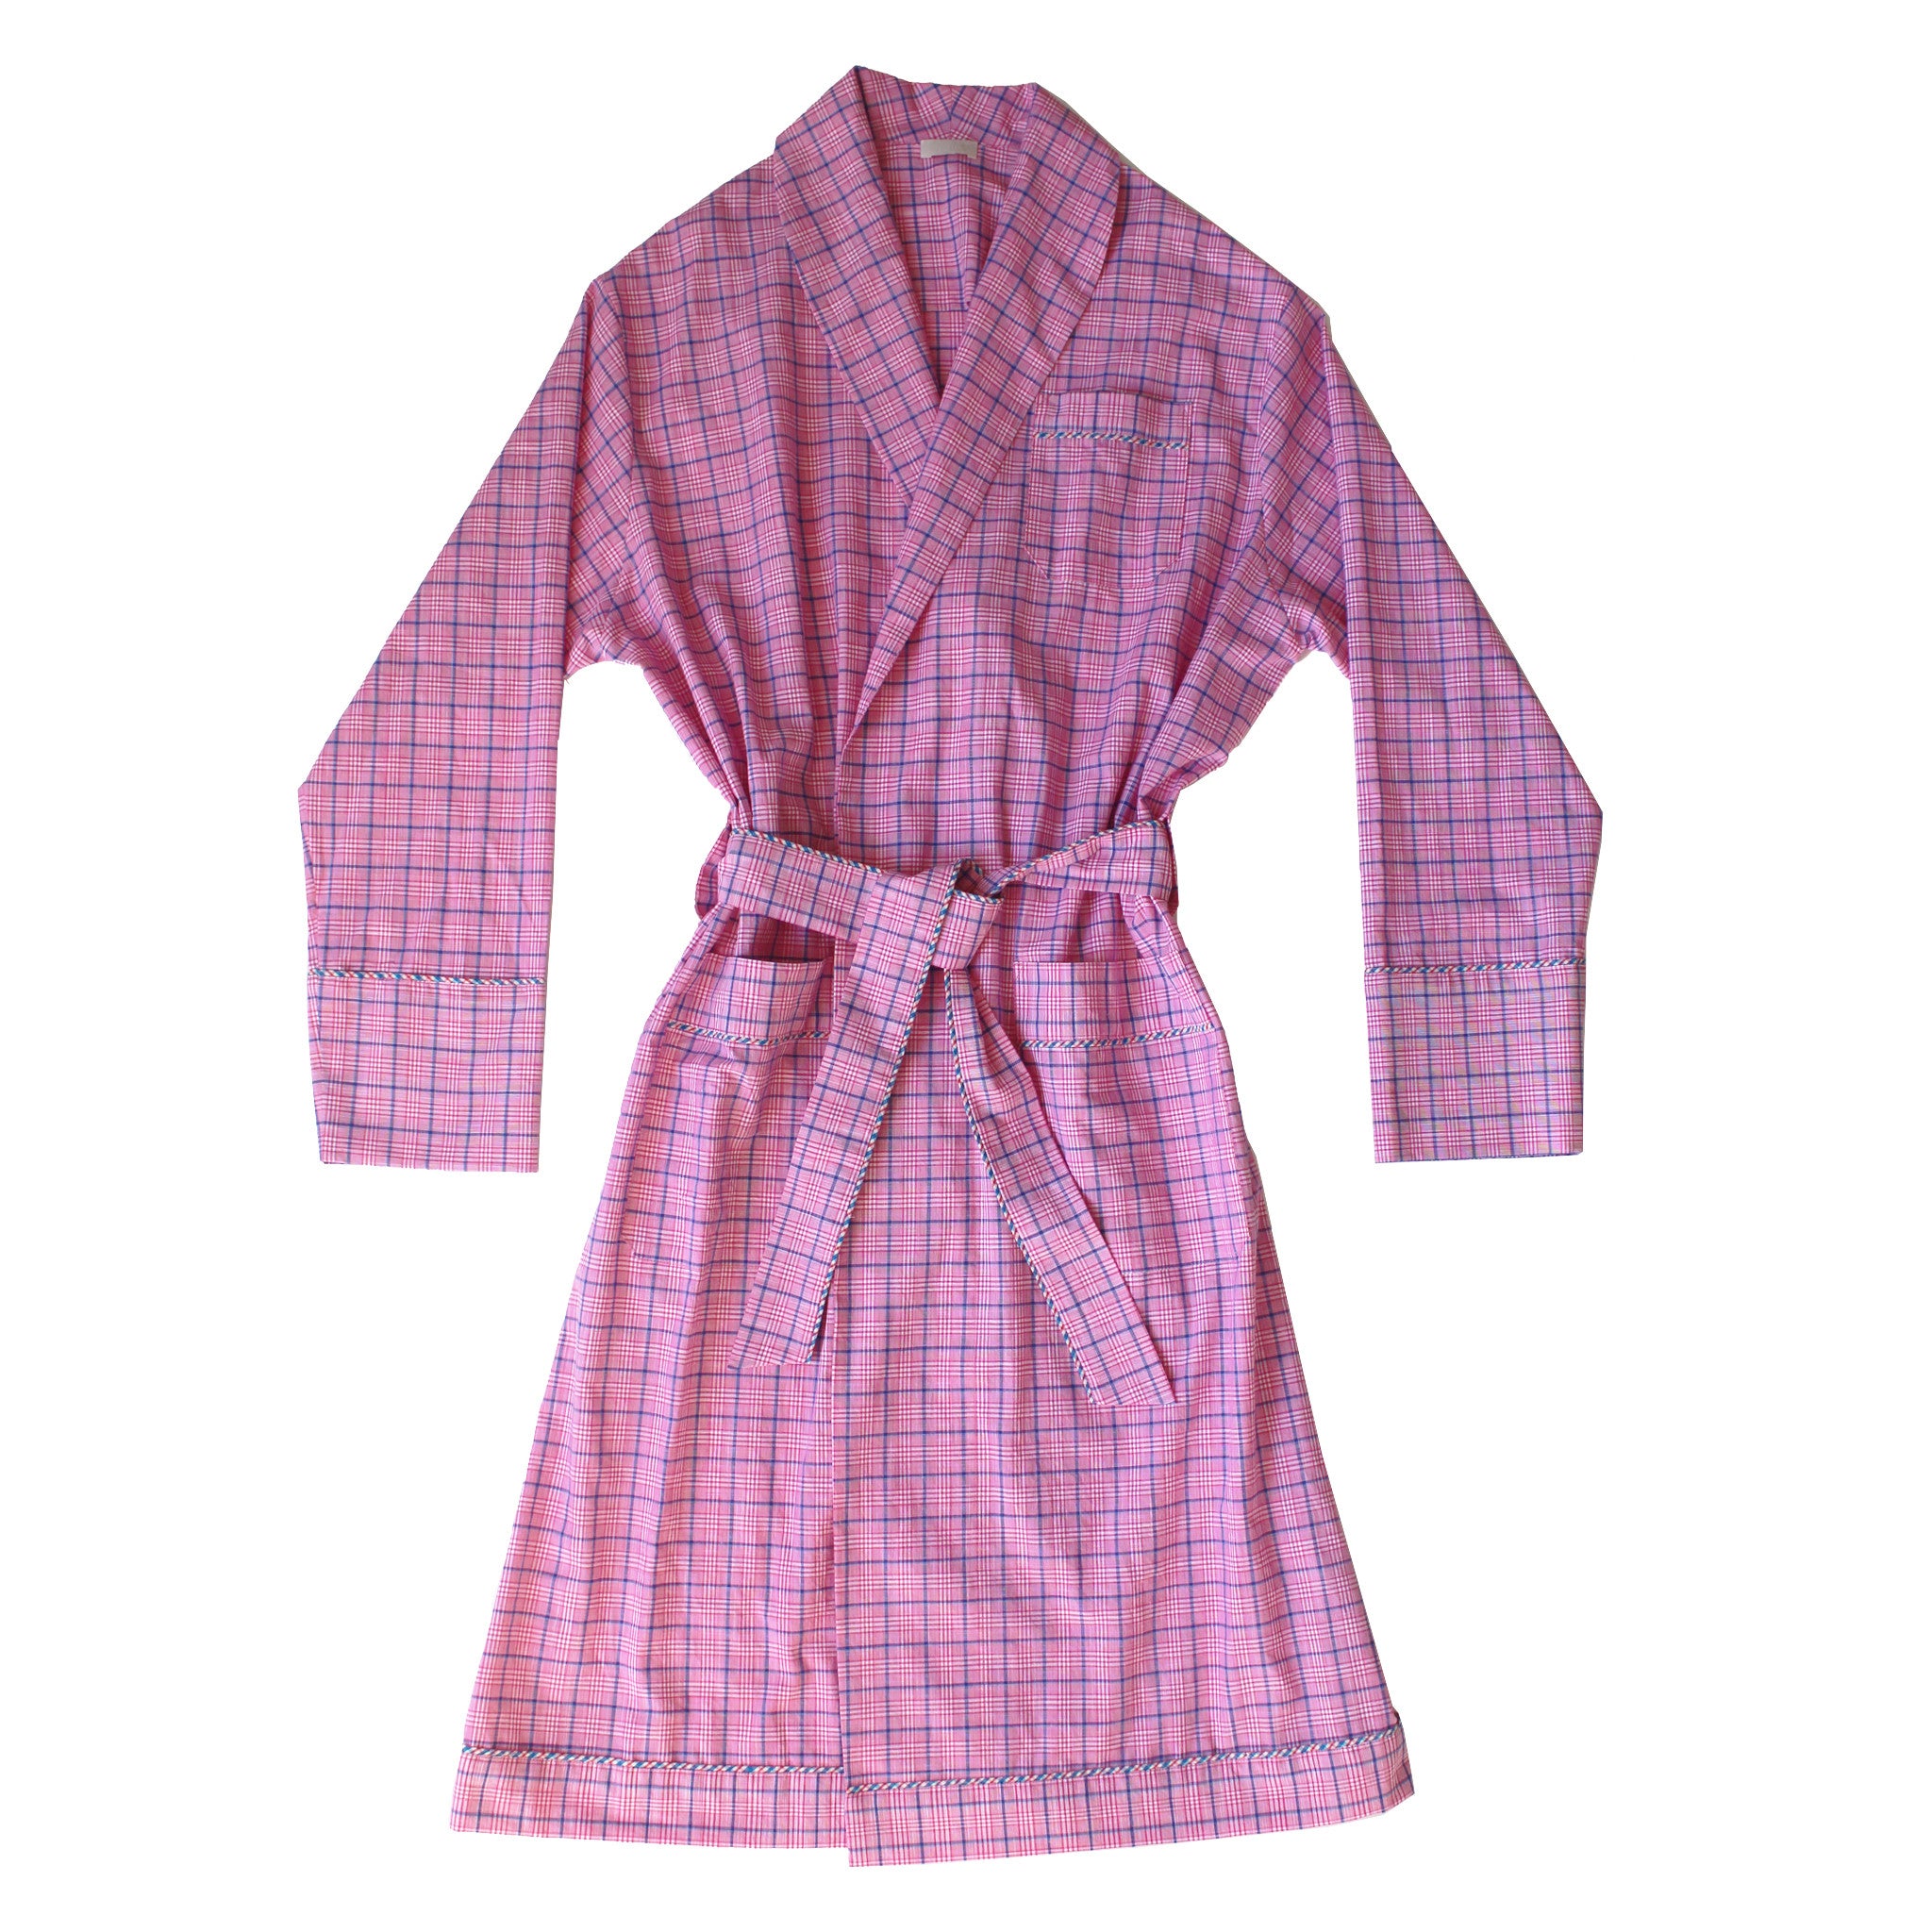 Janus Robe in Pink Check Italian Cotton